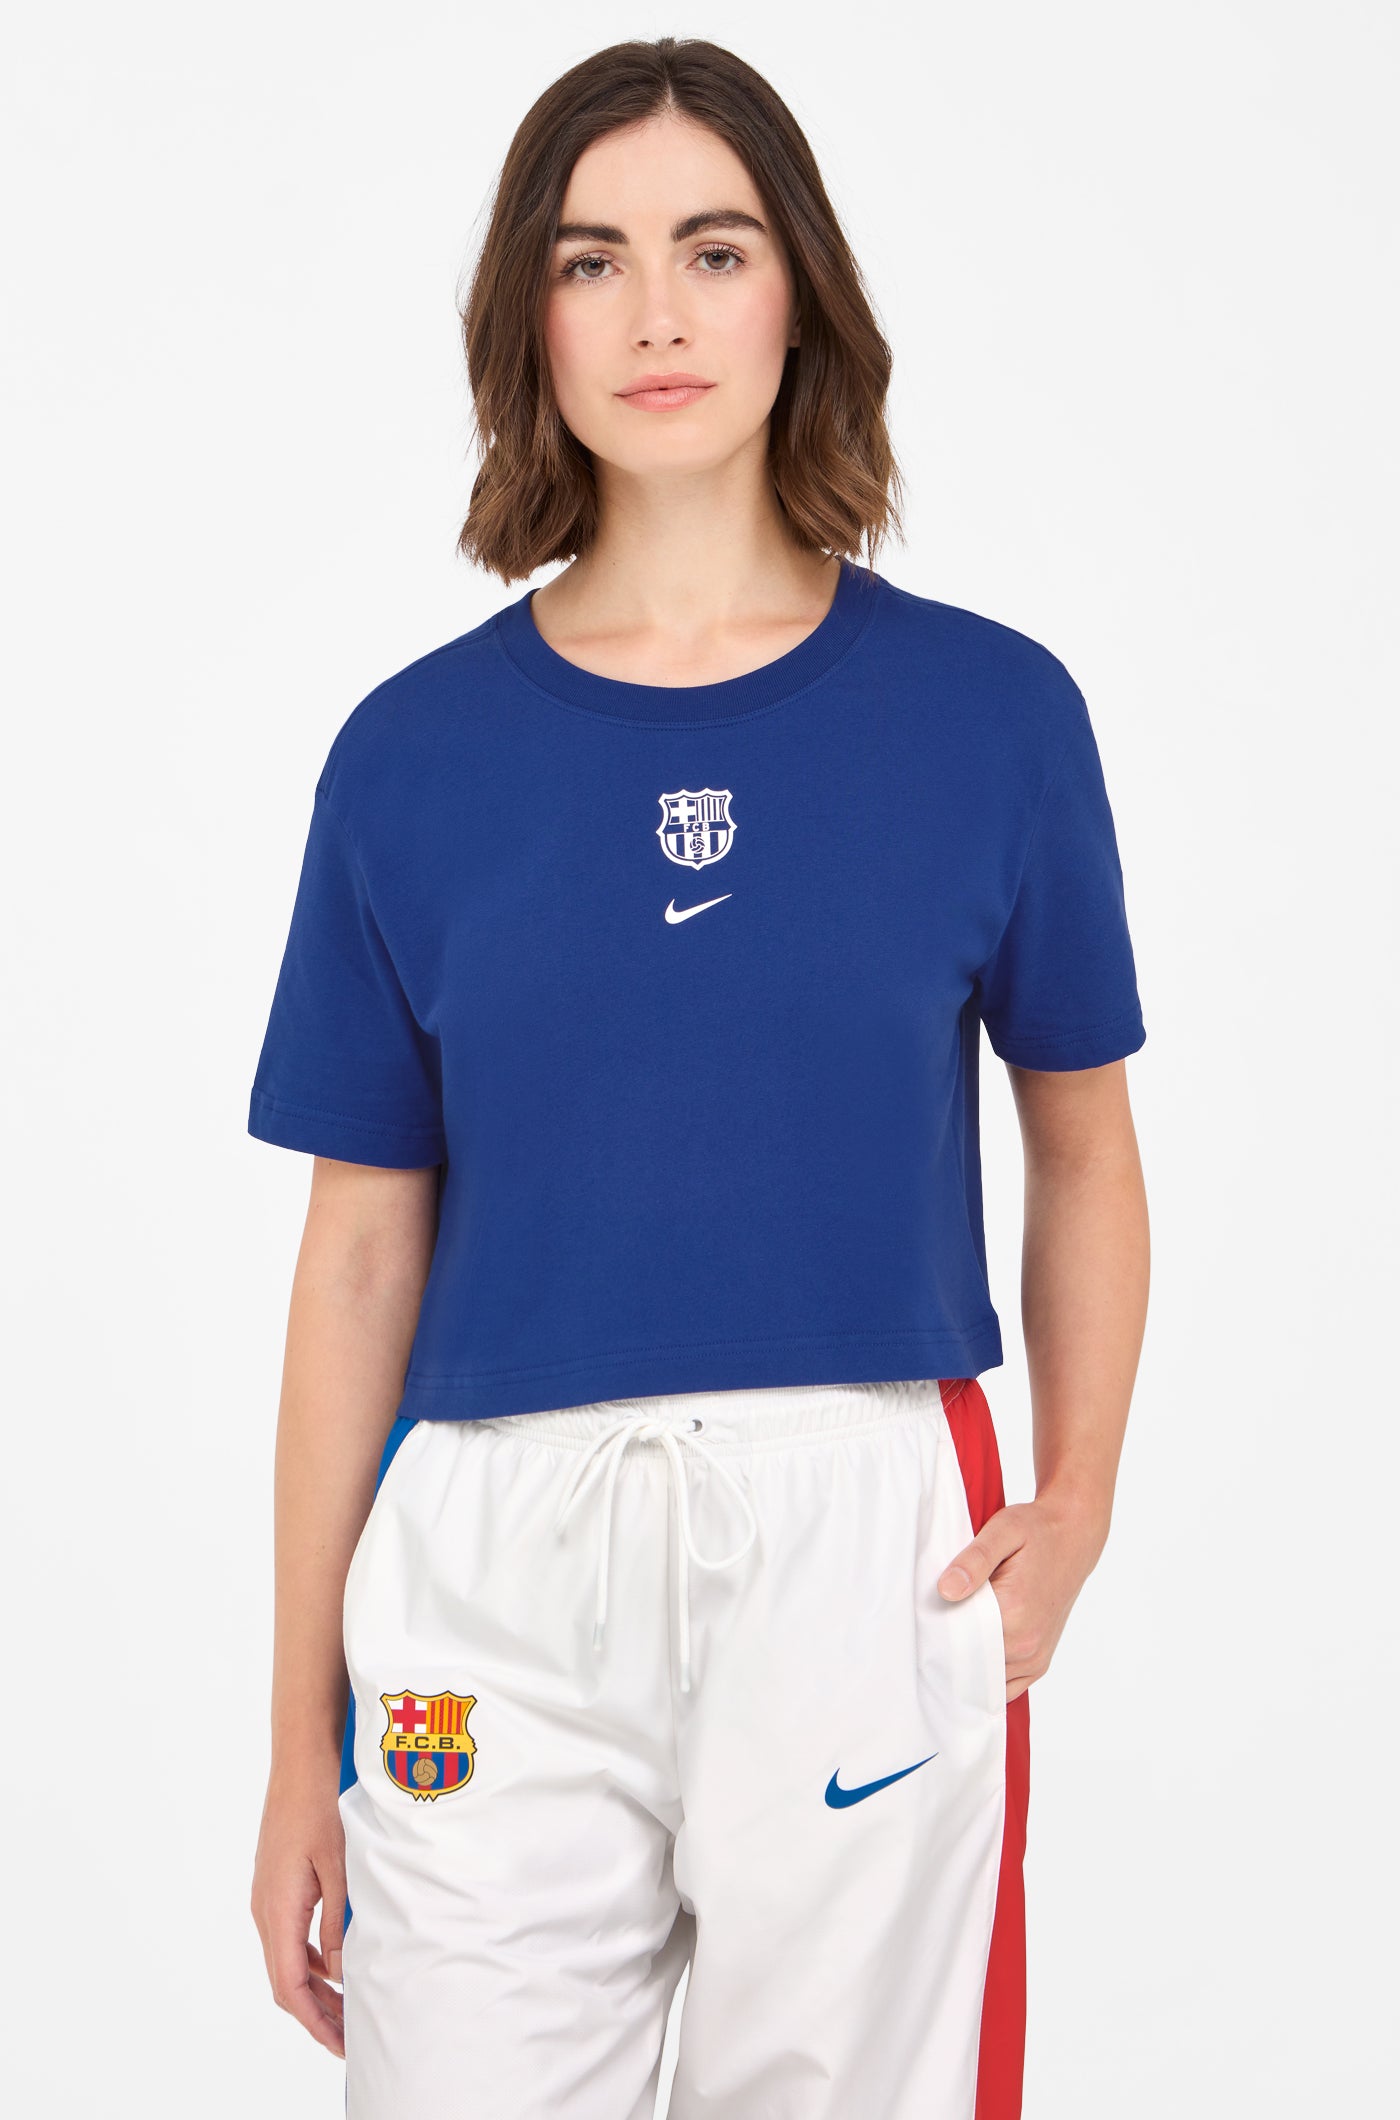 Crop top blue shield Barça Nike - Woman – Barça Official Store Spotify ...